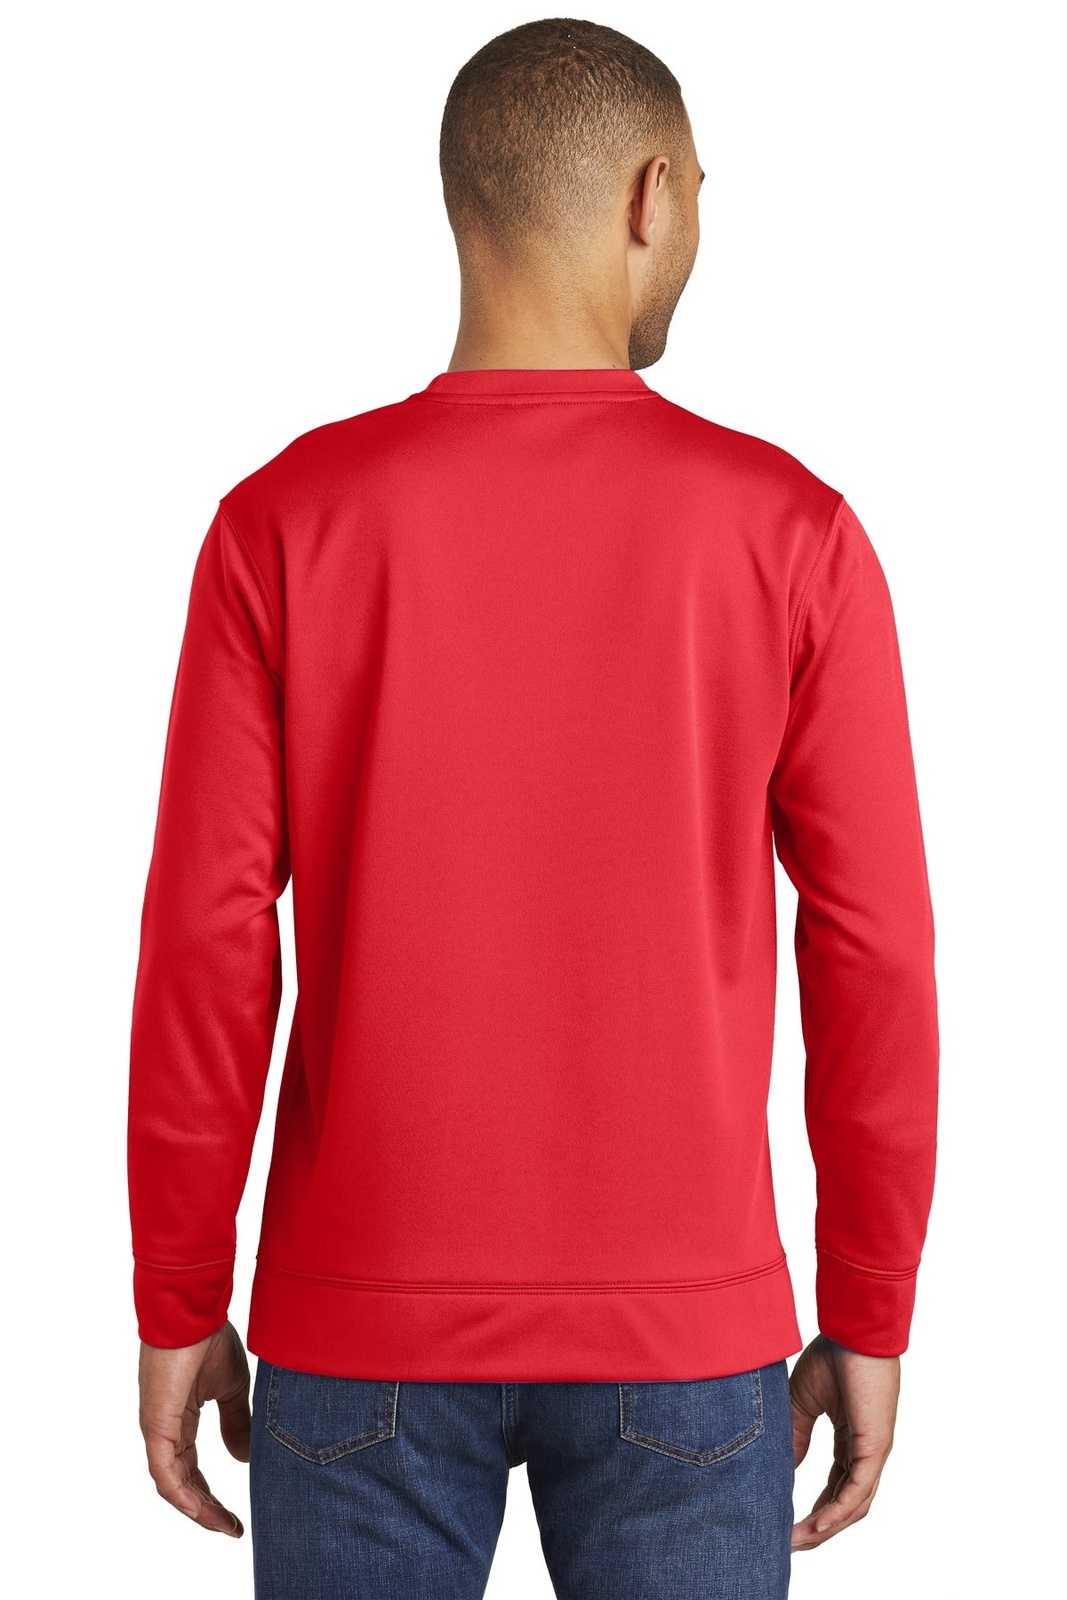 Port &amp; Company PC590 Fleece Crewneck Sweatshirt - Red - HIT a Double - 2